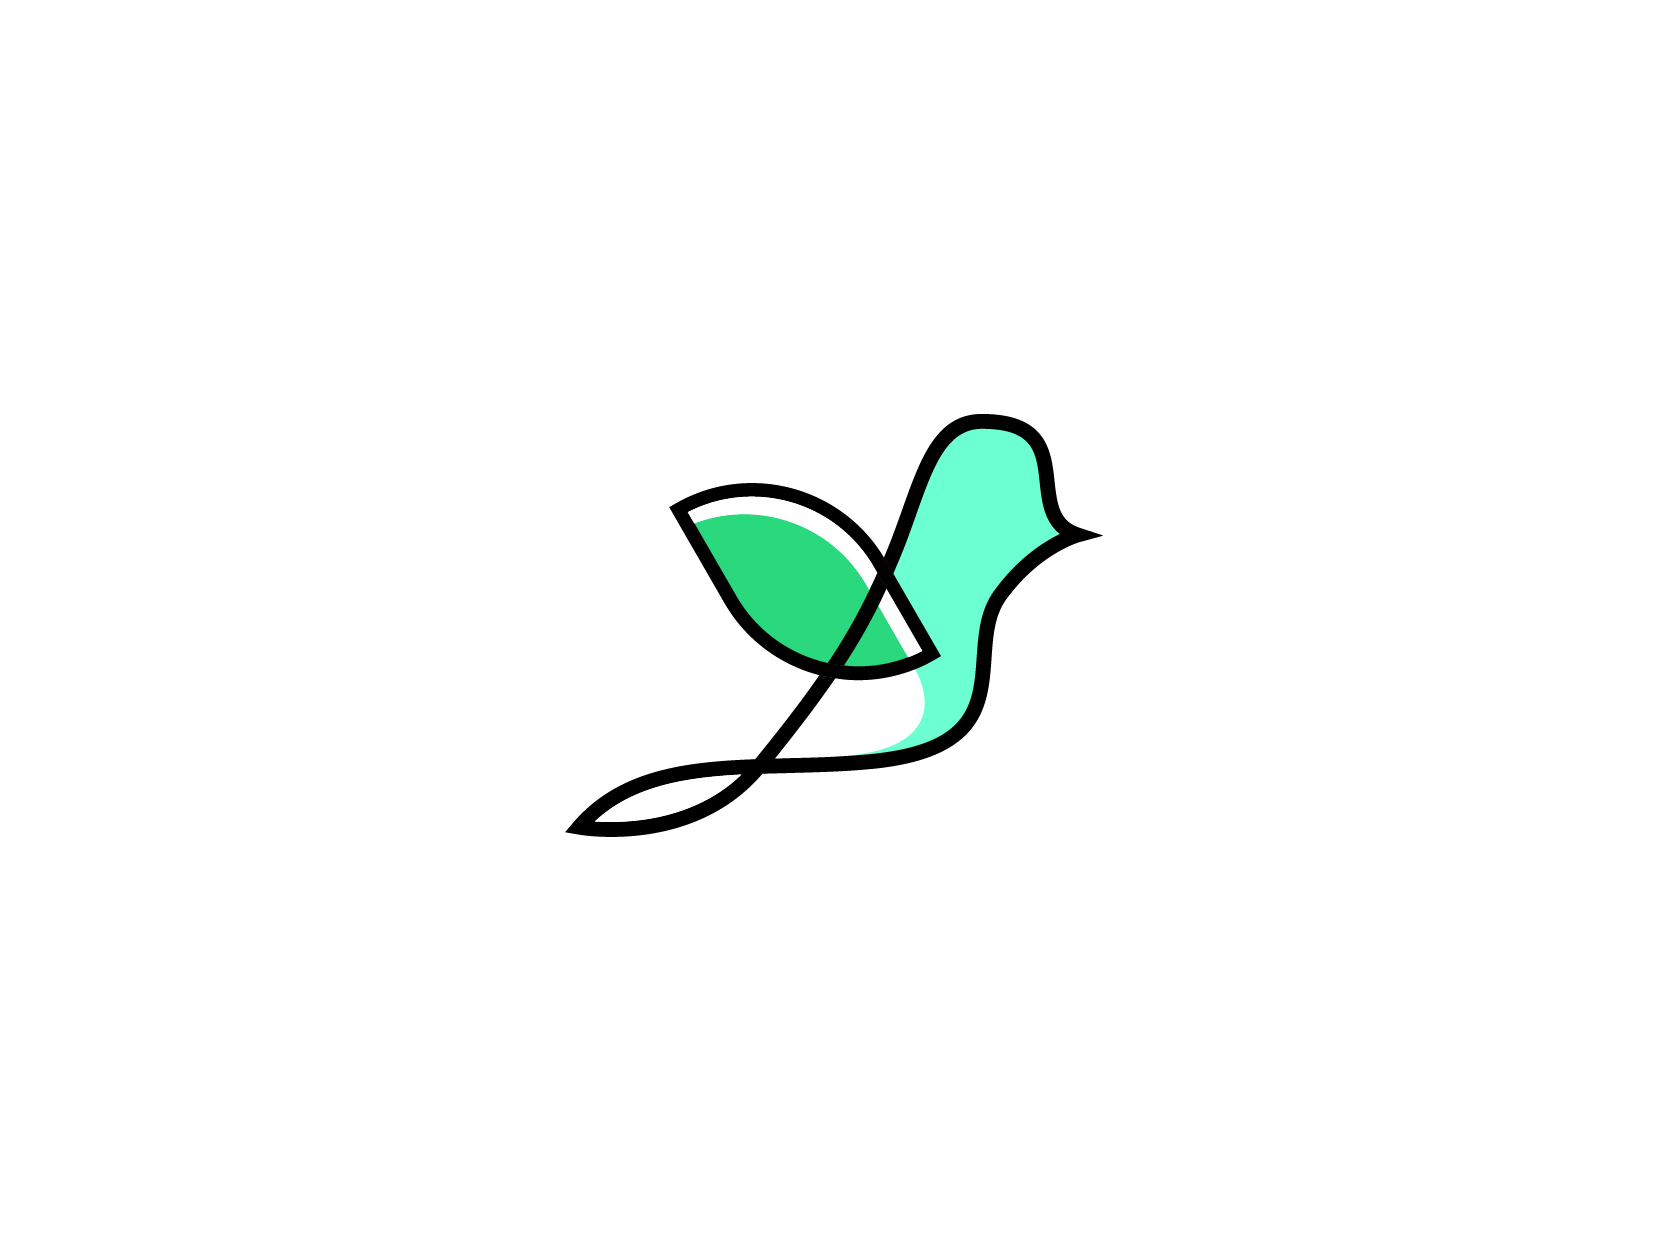 Simple bird. Логотип птичка. Птички в известных ЛОГОТИПАХ. Маленькая птичка на логотипе. Лого птица Чижик.